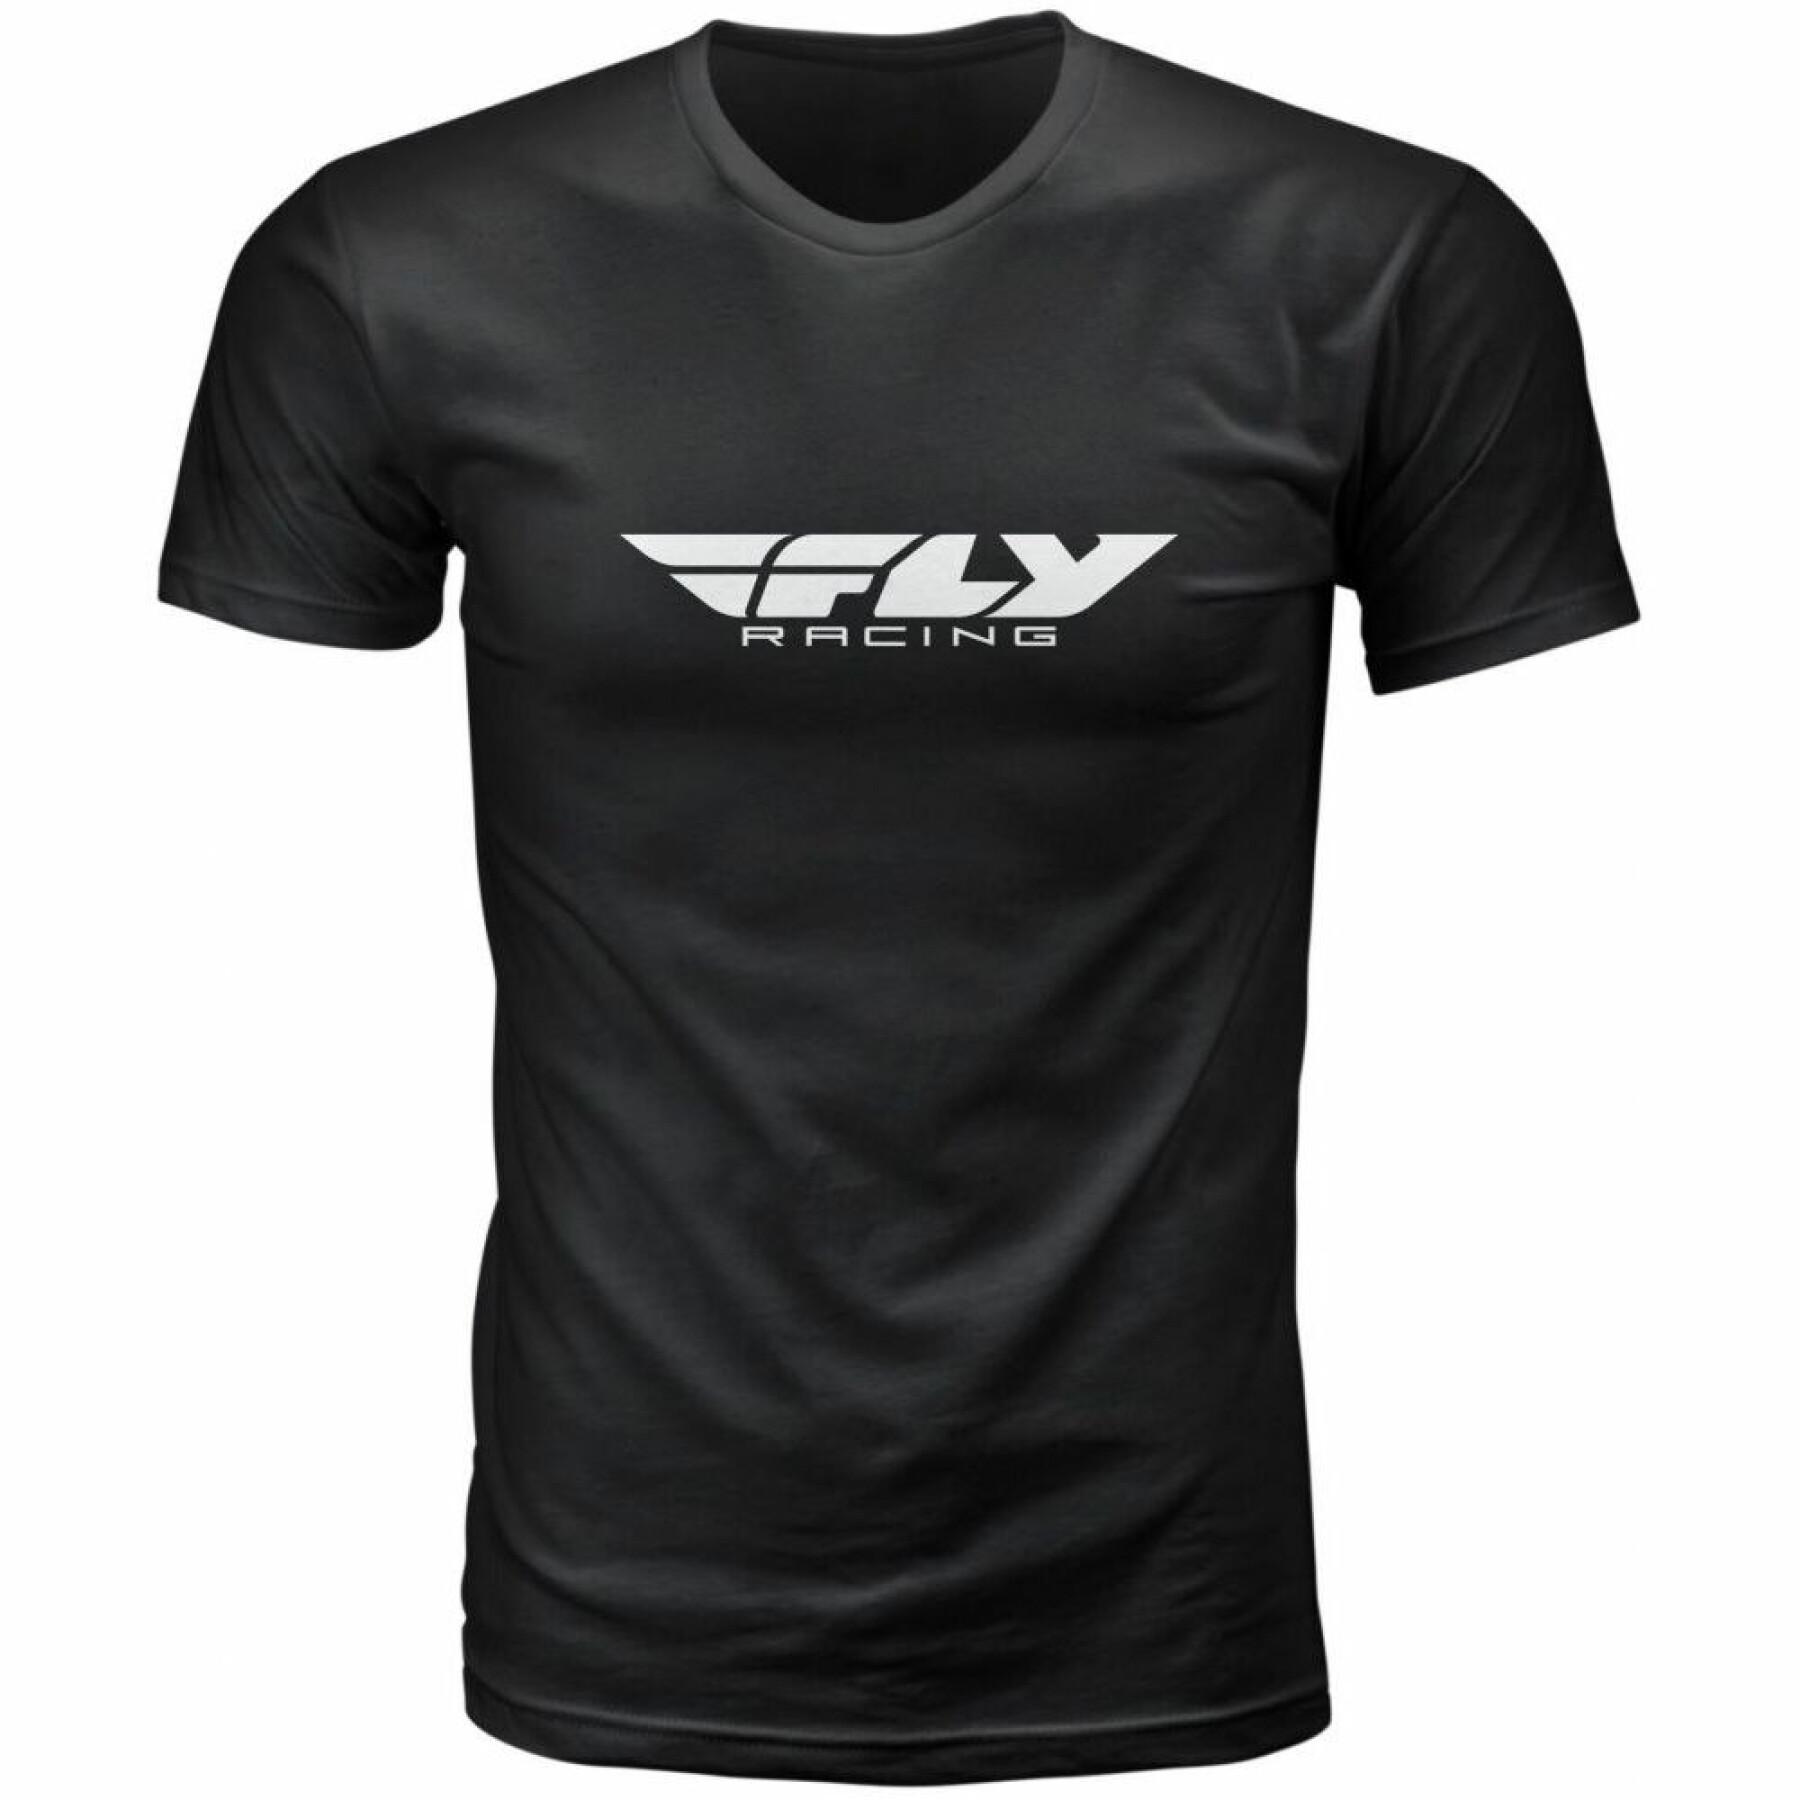 Camiseta Fly Racing Corporate 2020